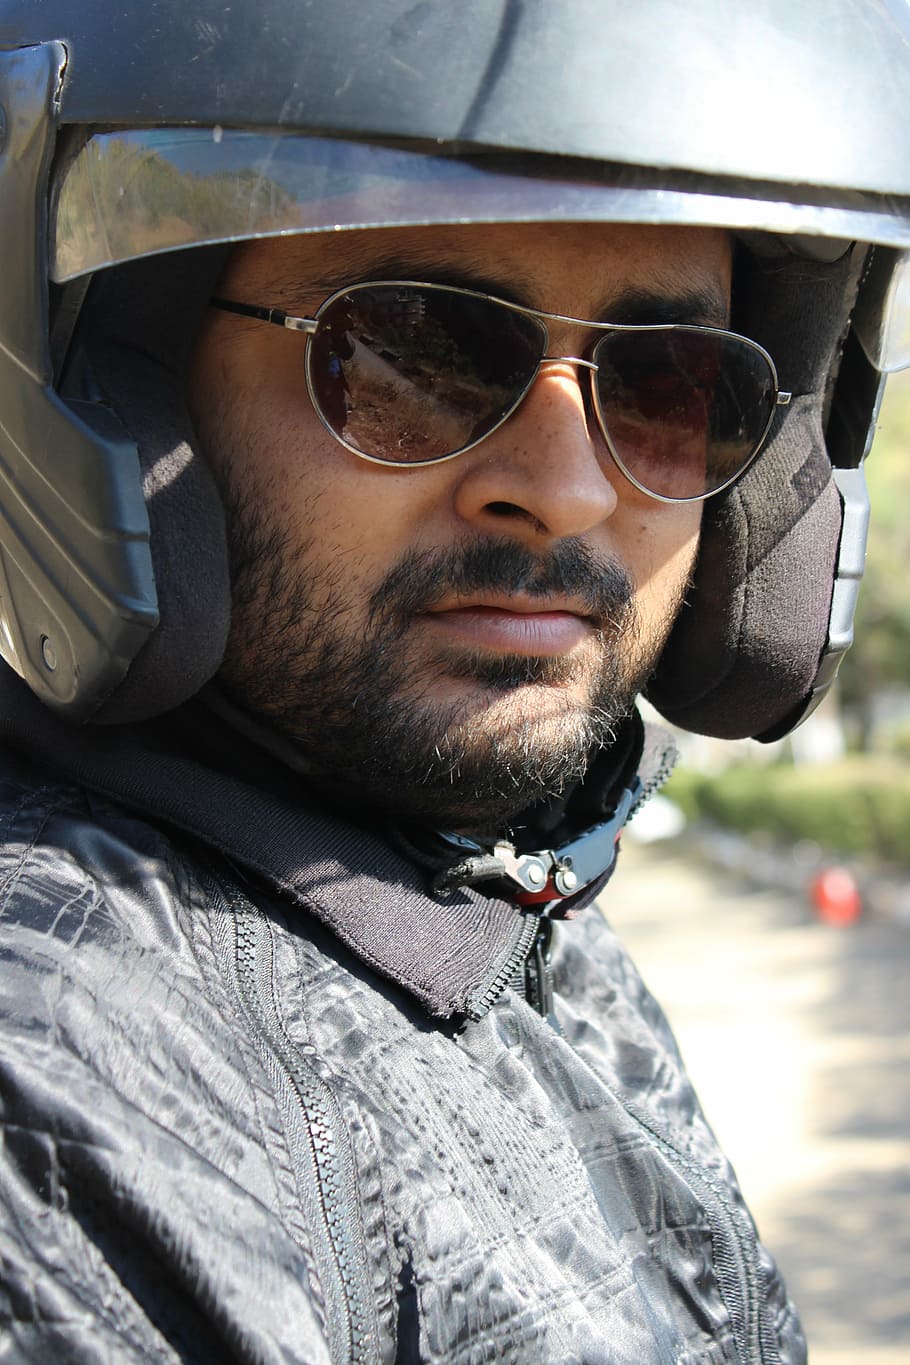 helmet, jacket, black, motorcycle, leather, transport, sunglasses, travel, dom, person